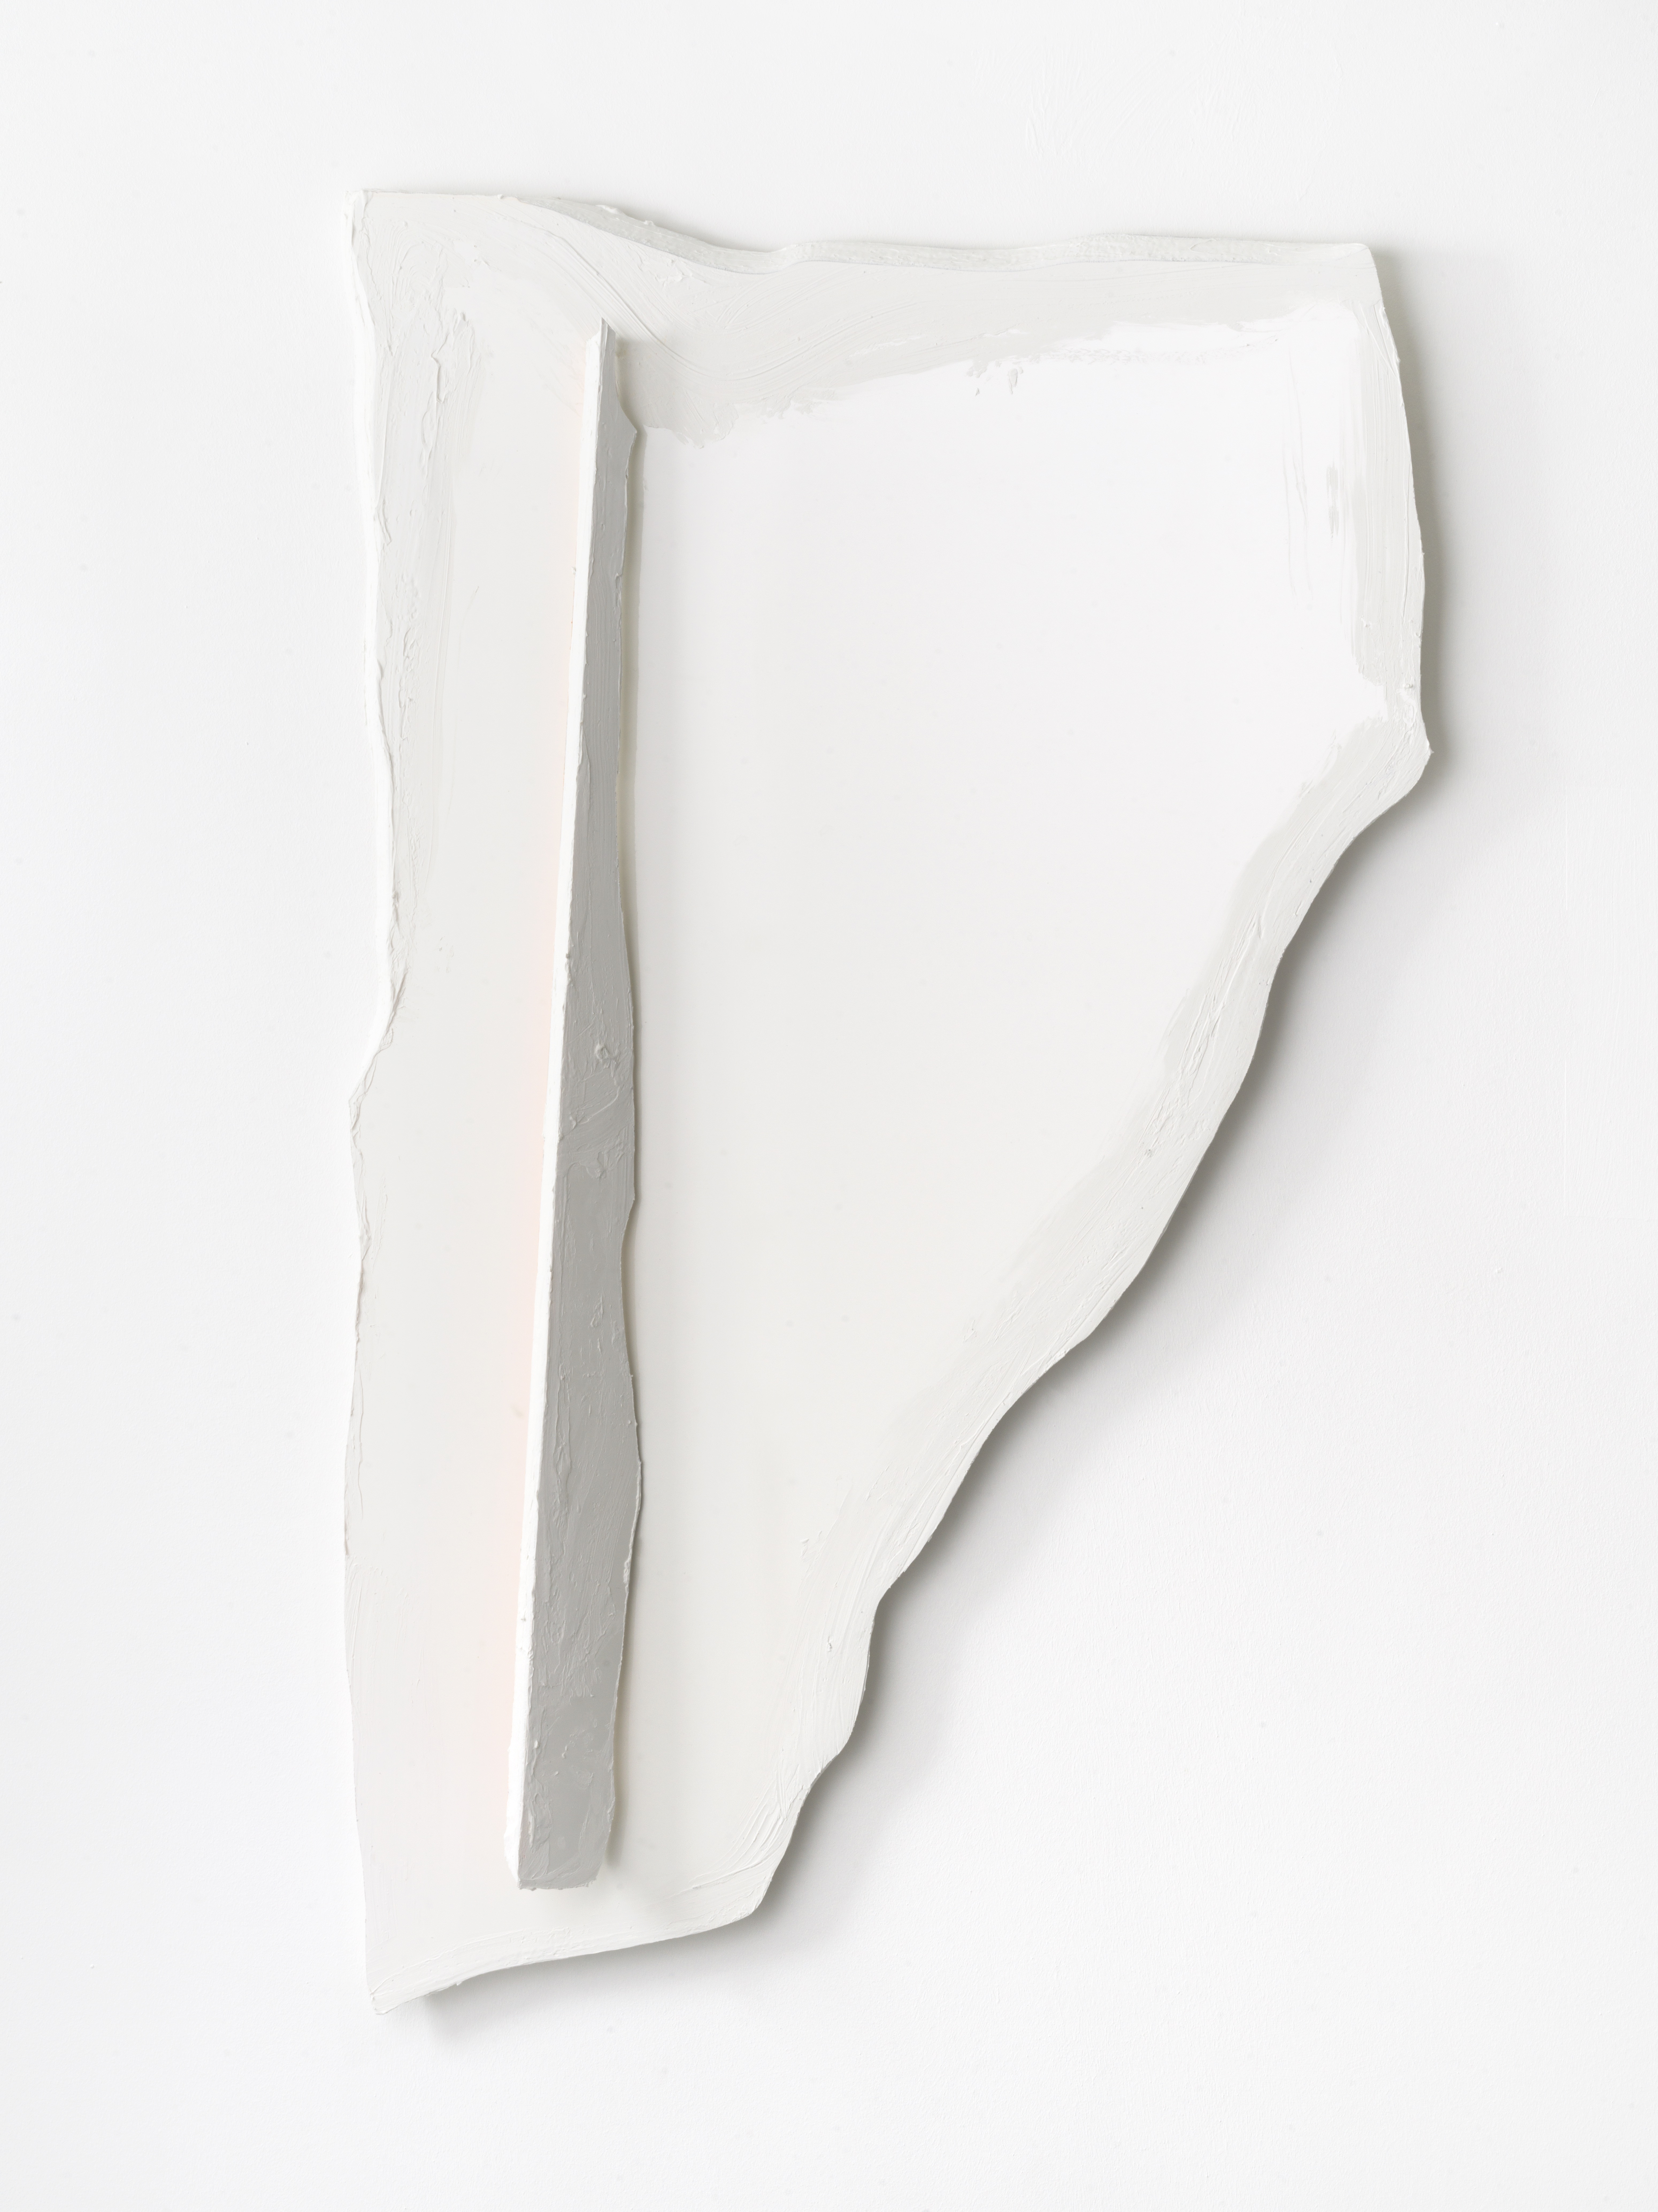 14. Adrian Altintas - AAD034 - 2021 - Untitled 150,4 x 89,6 x 5 cm. - Sandwichpanel, Acryl.